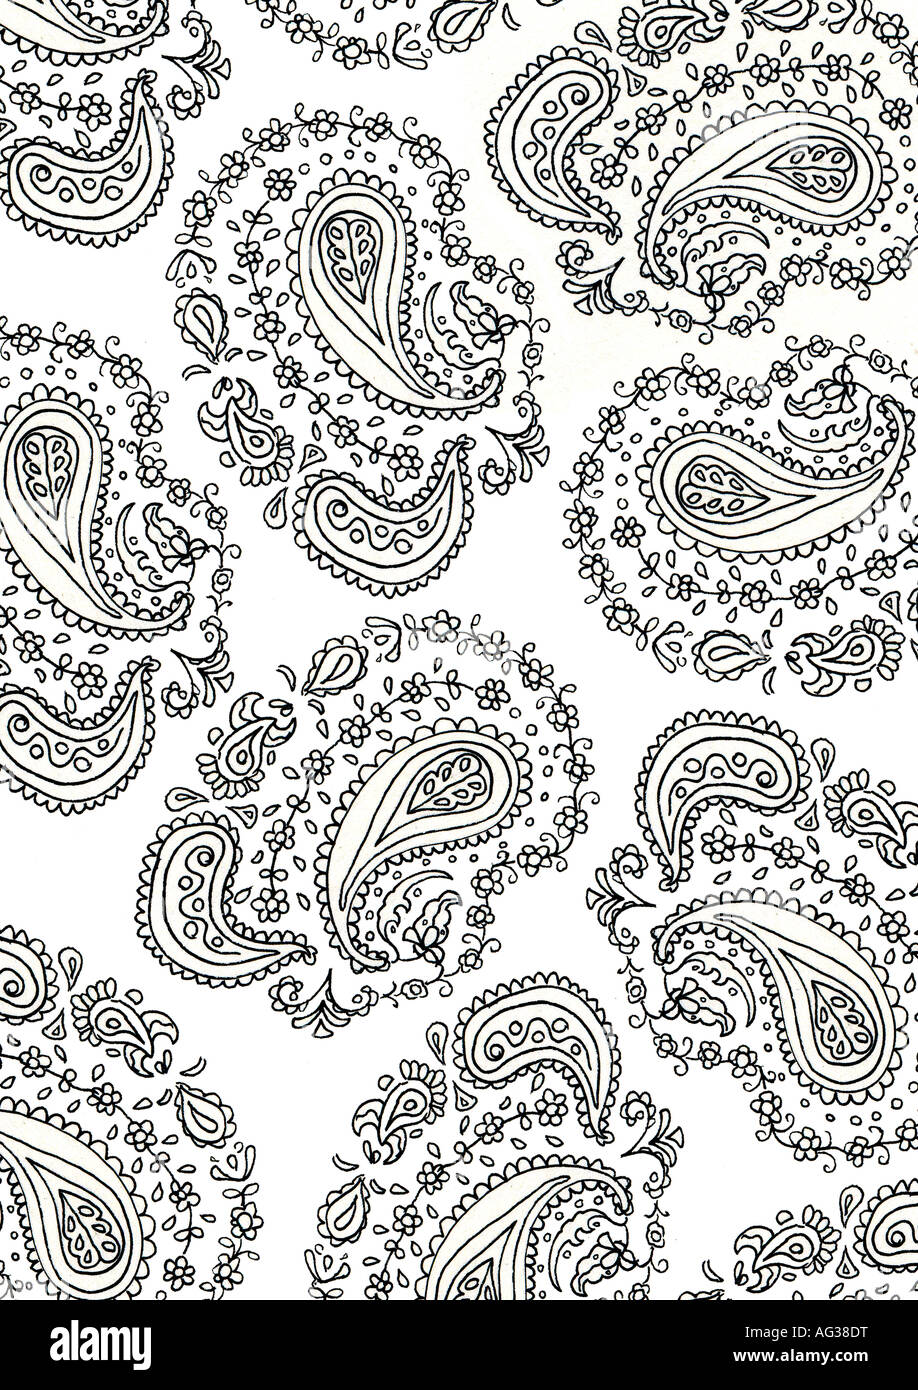 Hand drawn Paisley style repeat pattern Stock Photo